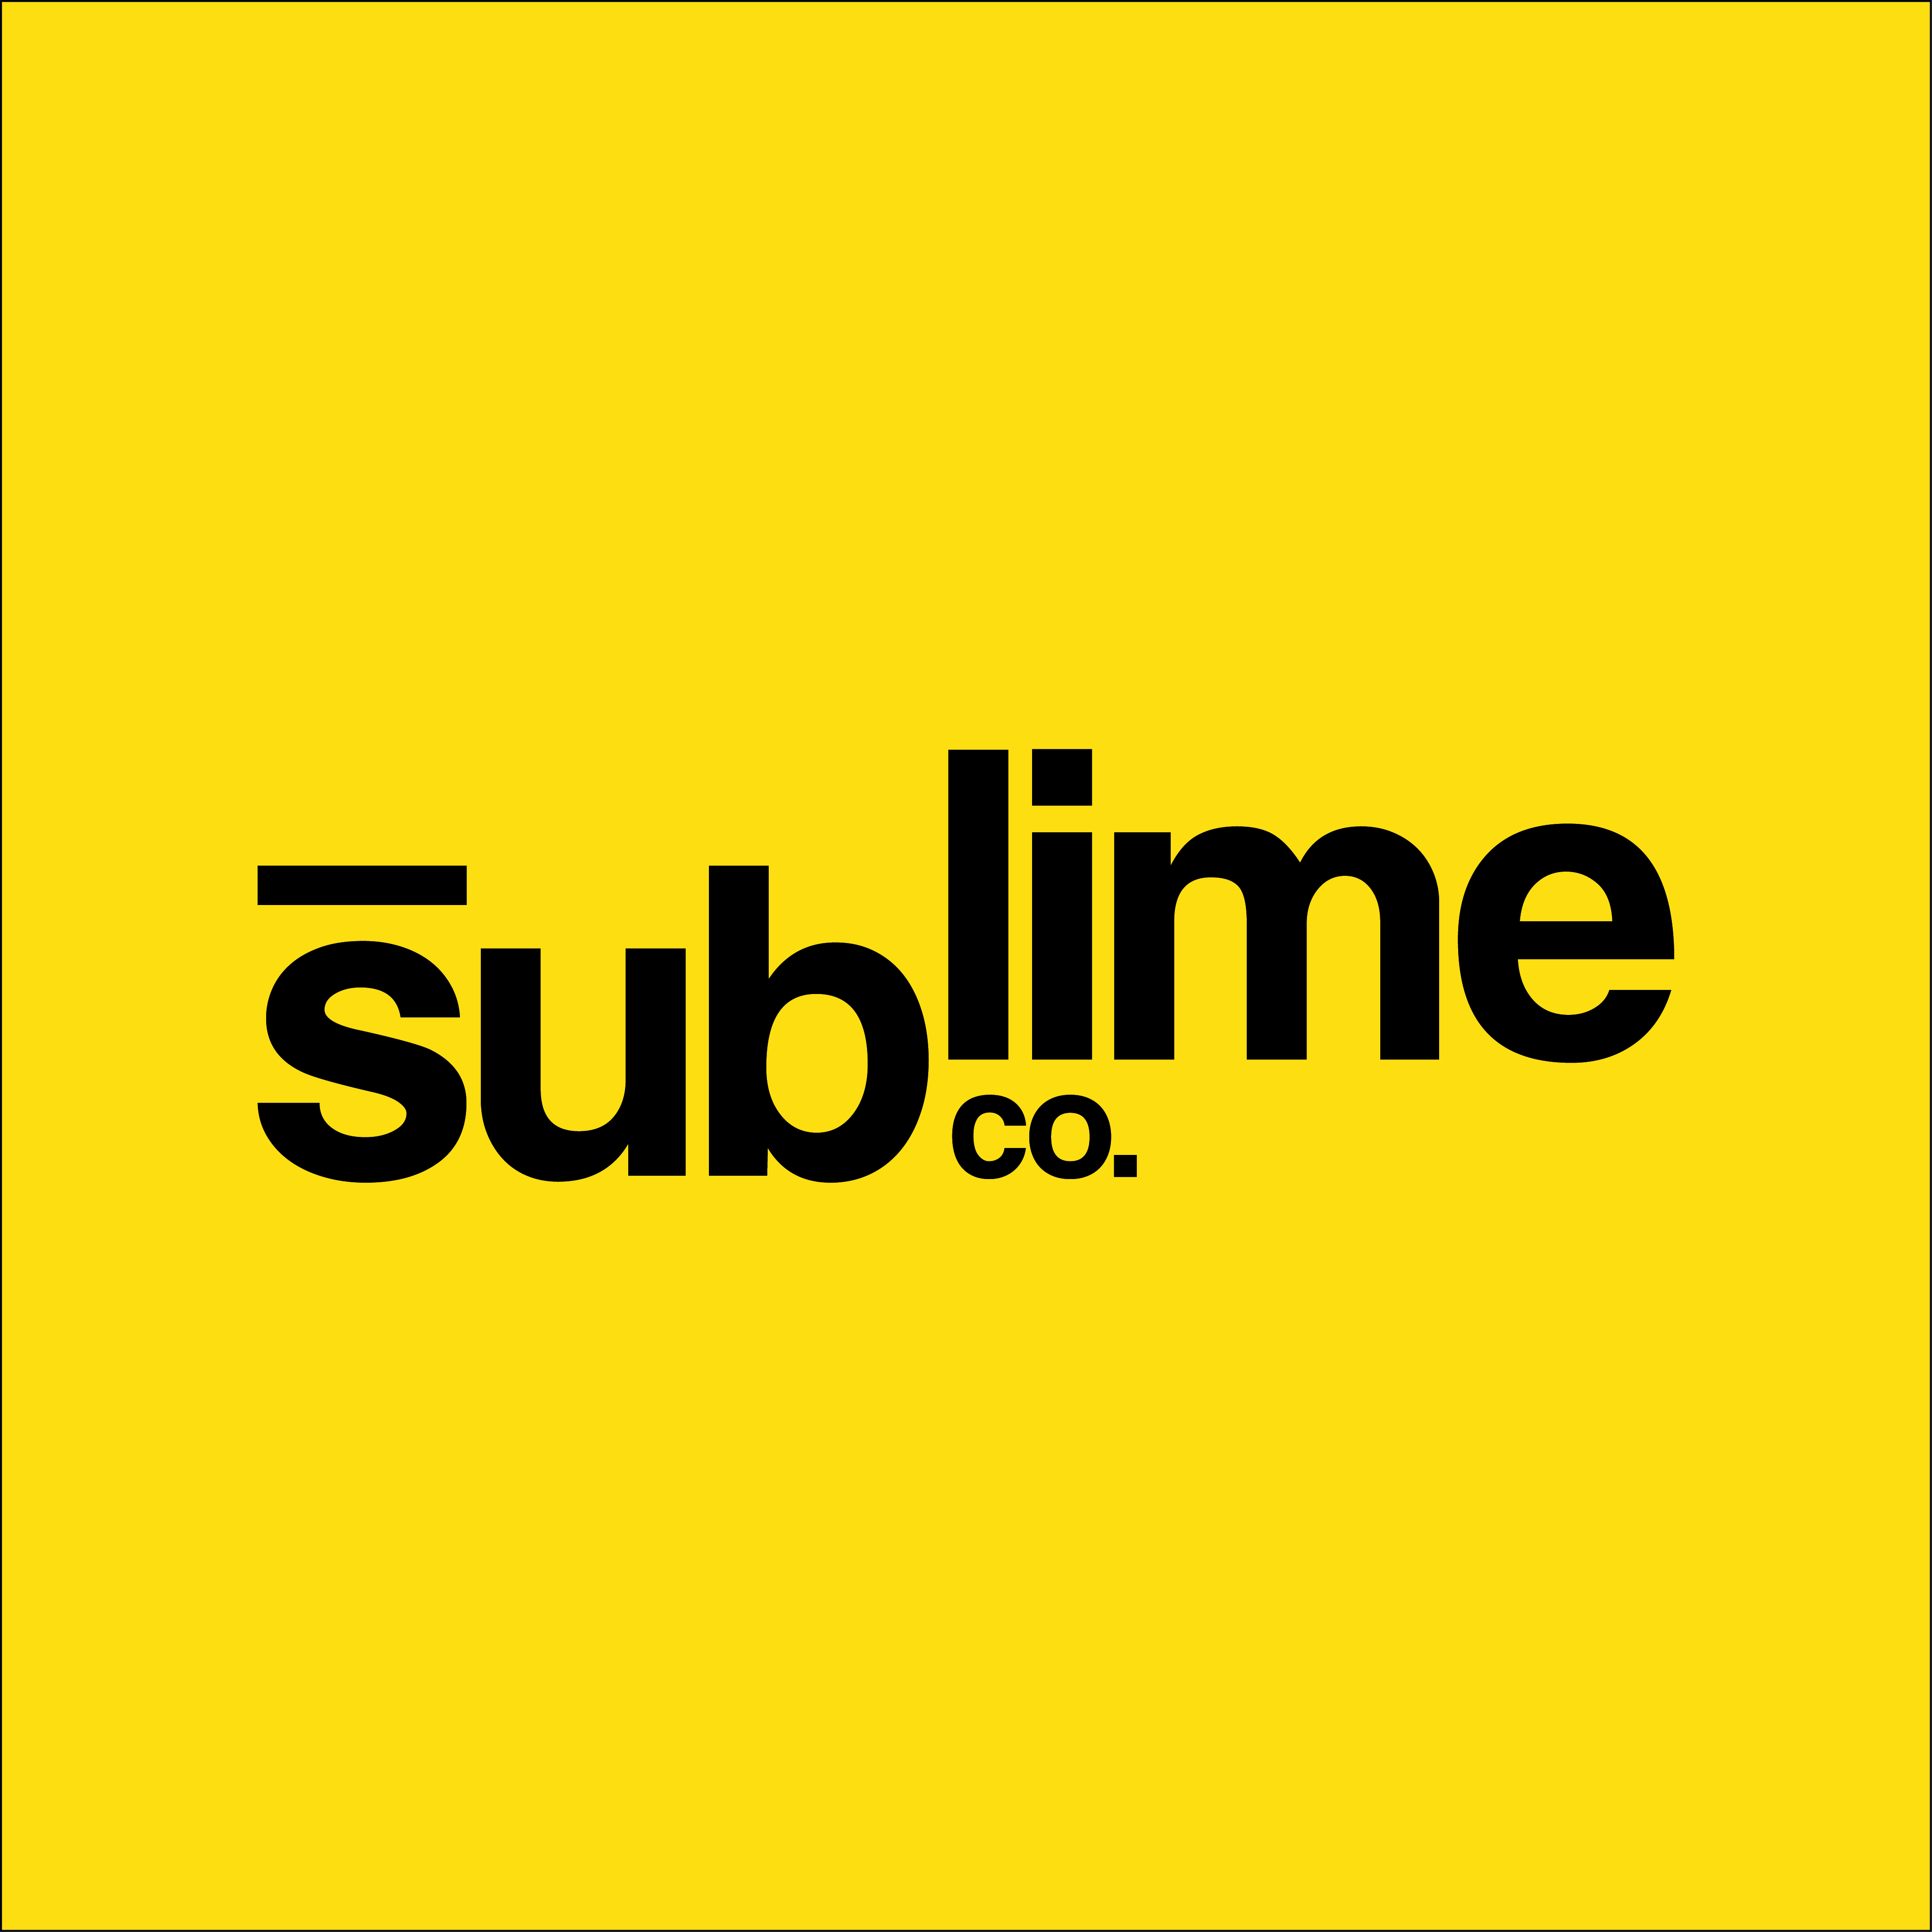 Sublime Co. Logo